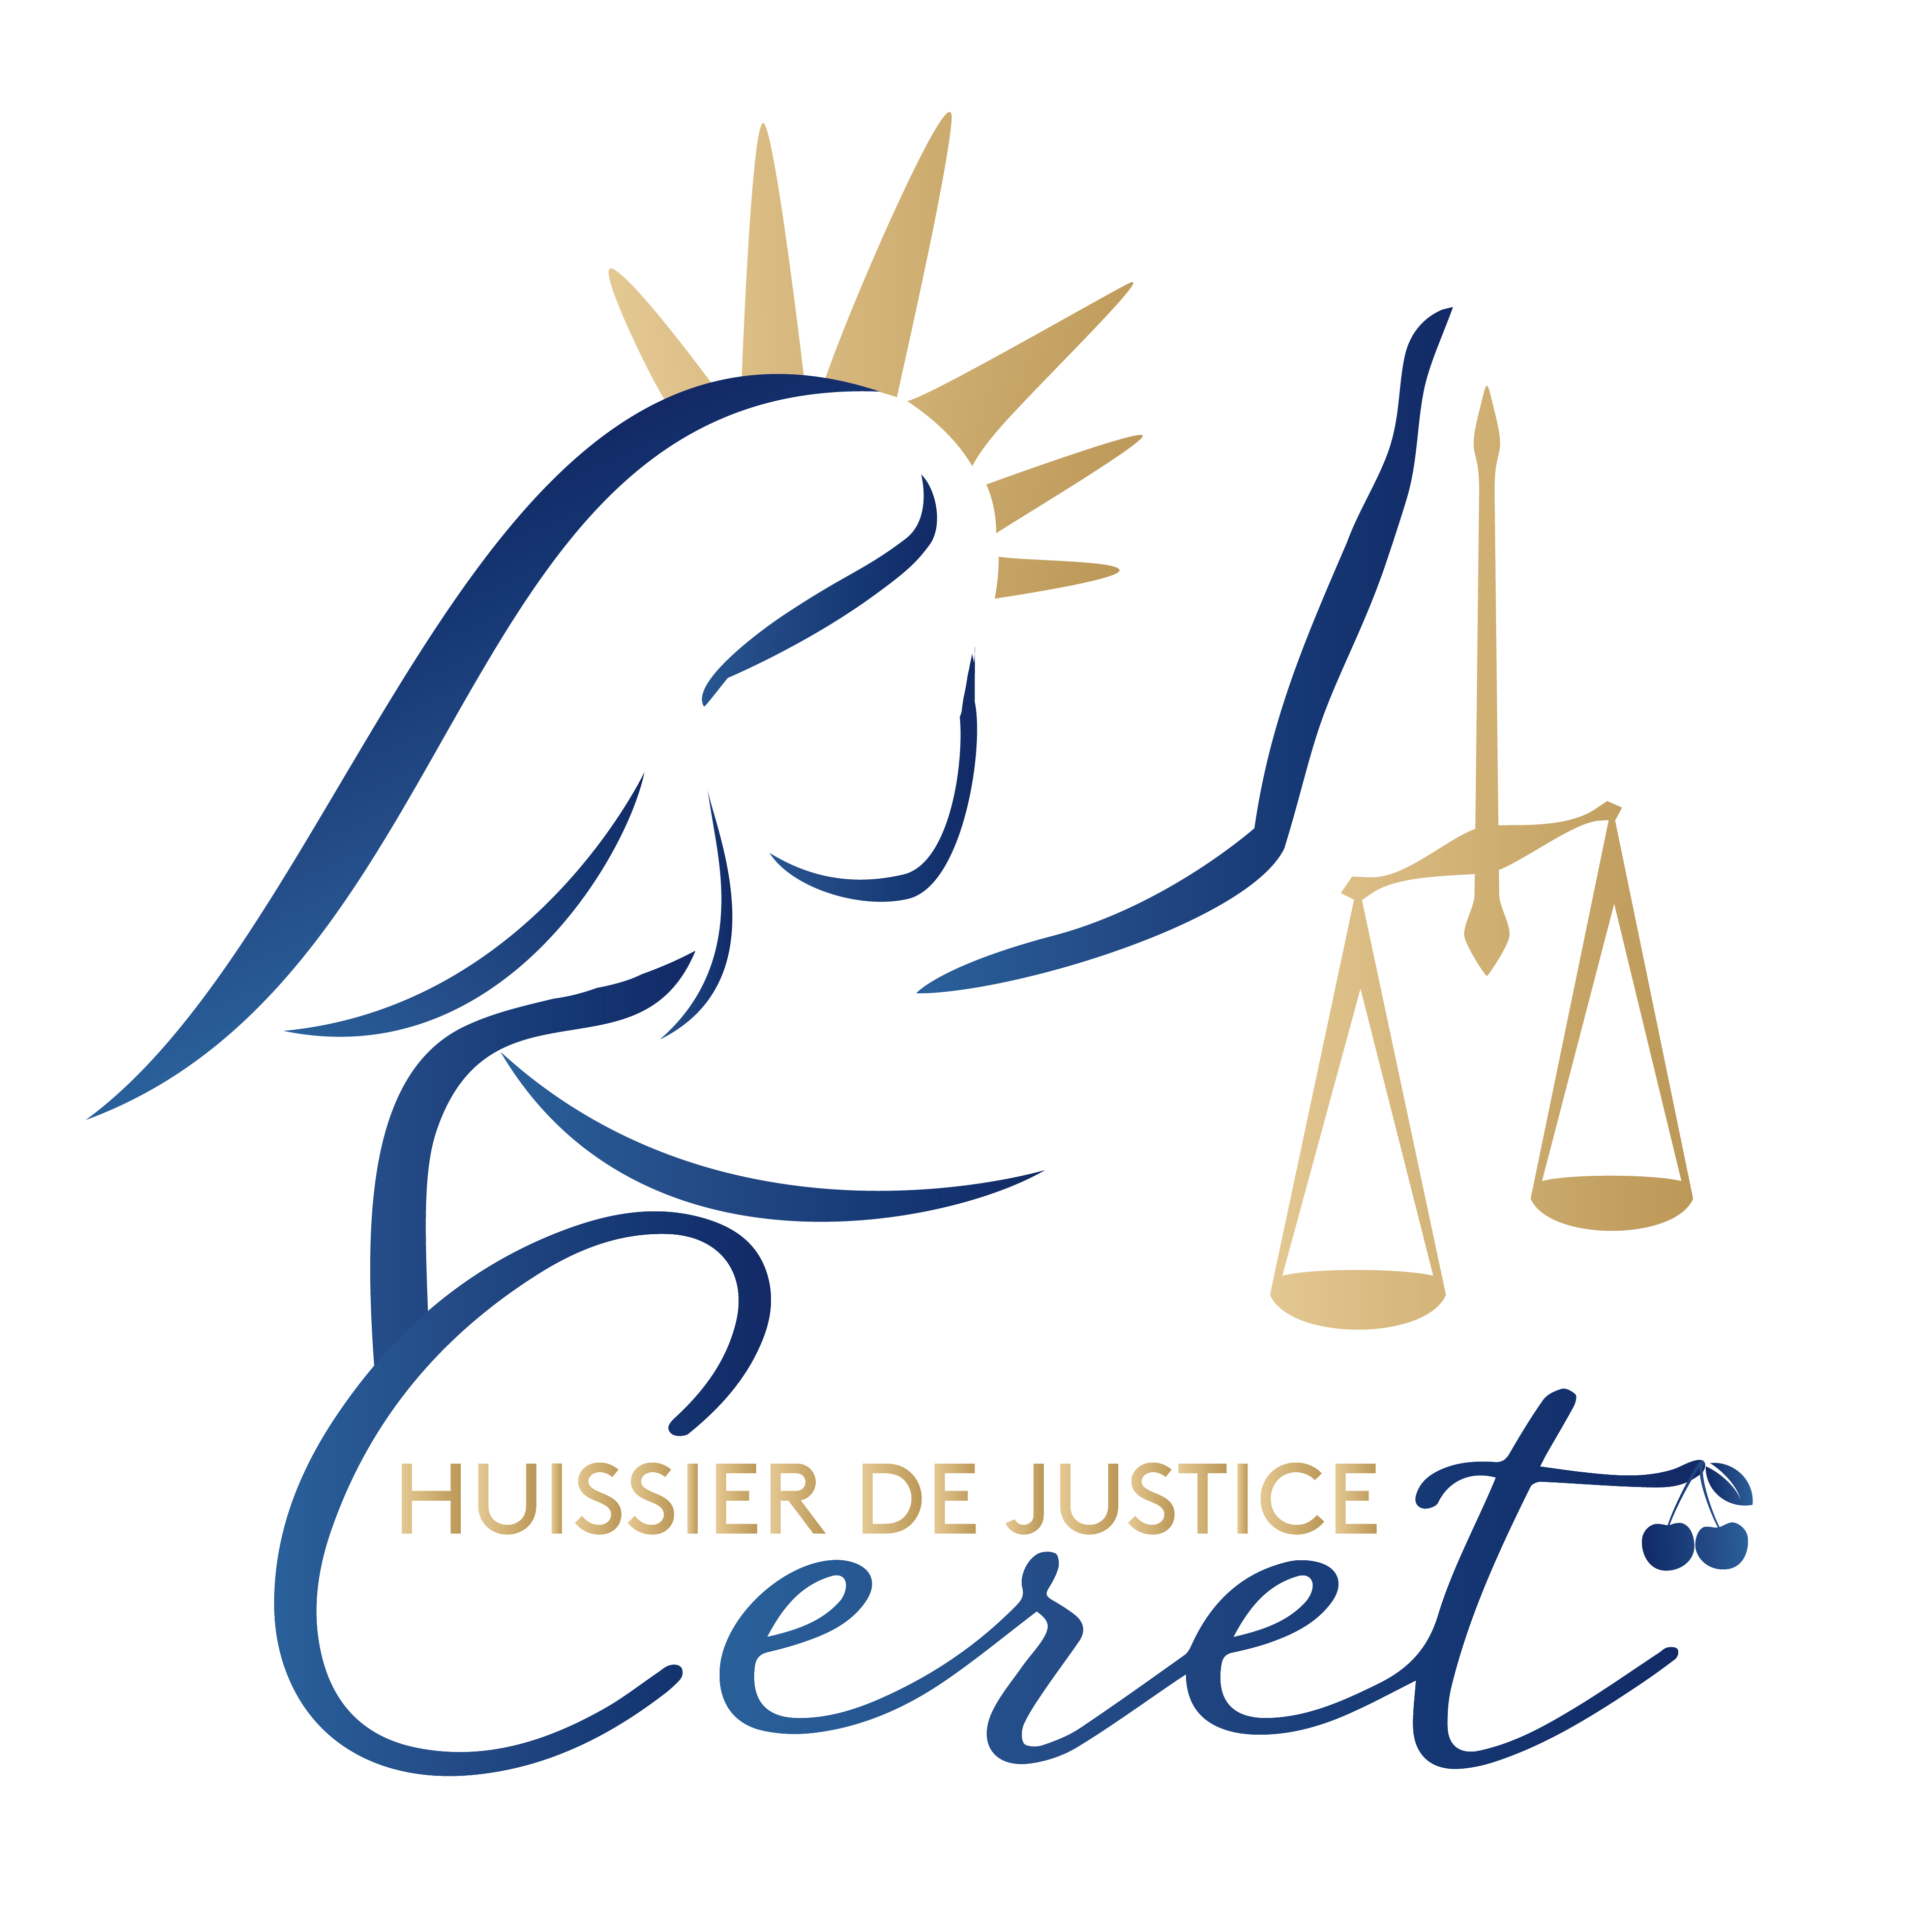 HUISSIER DE DE JUSTICE / COMMISSAIRE DE JUSTICE  – PYRENEES-ORIENTALES (66) – ETUDE CELLIER – HUISSIER DE JUSTICE